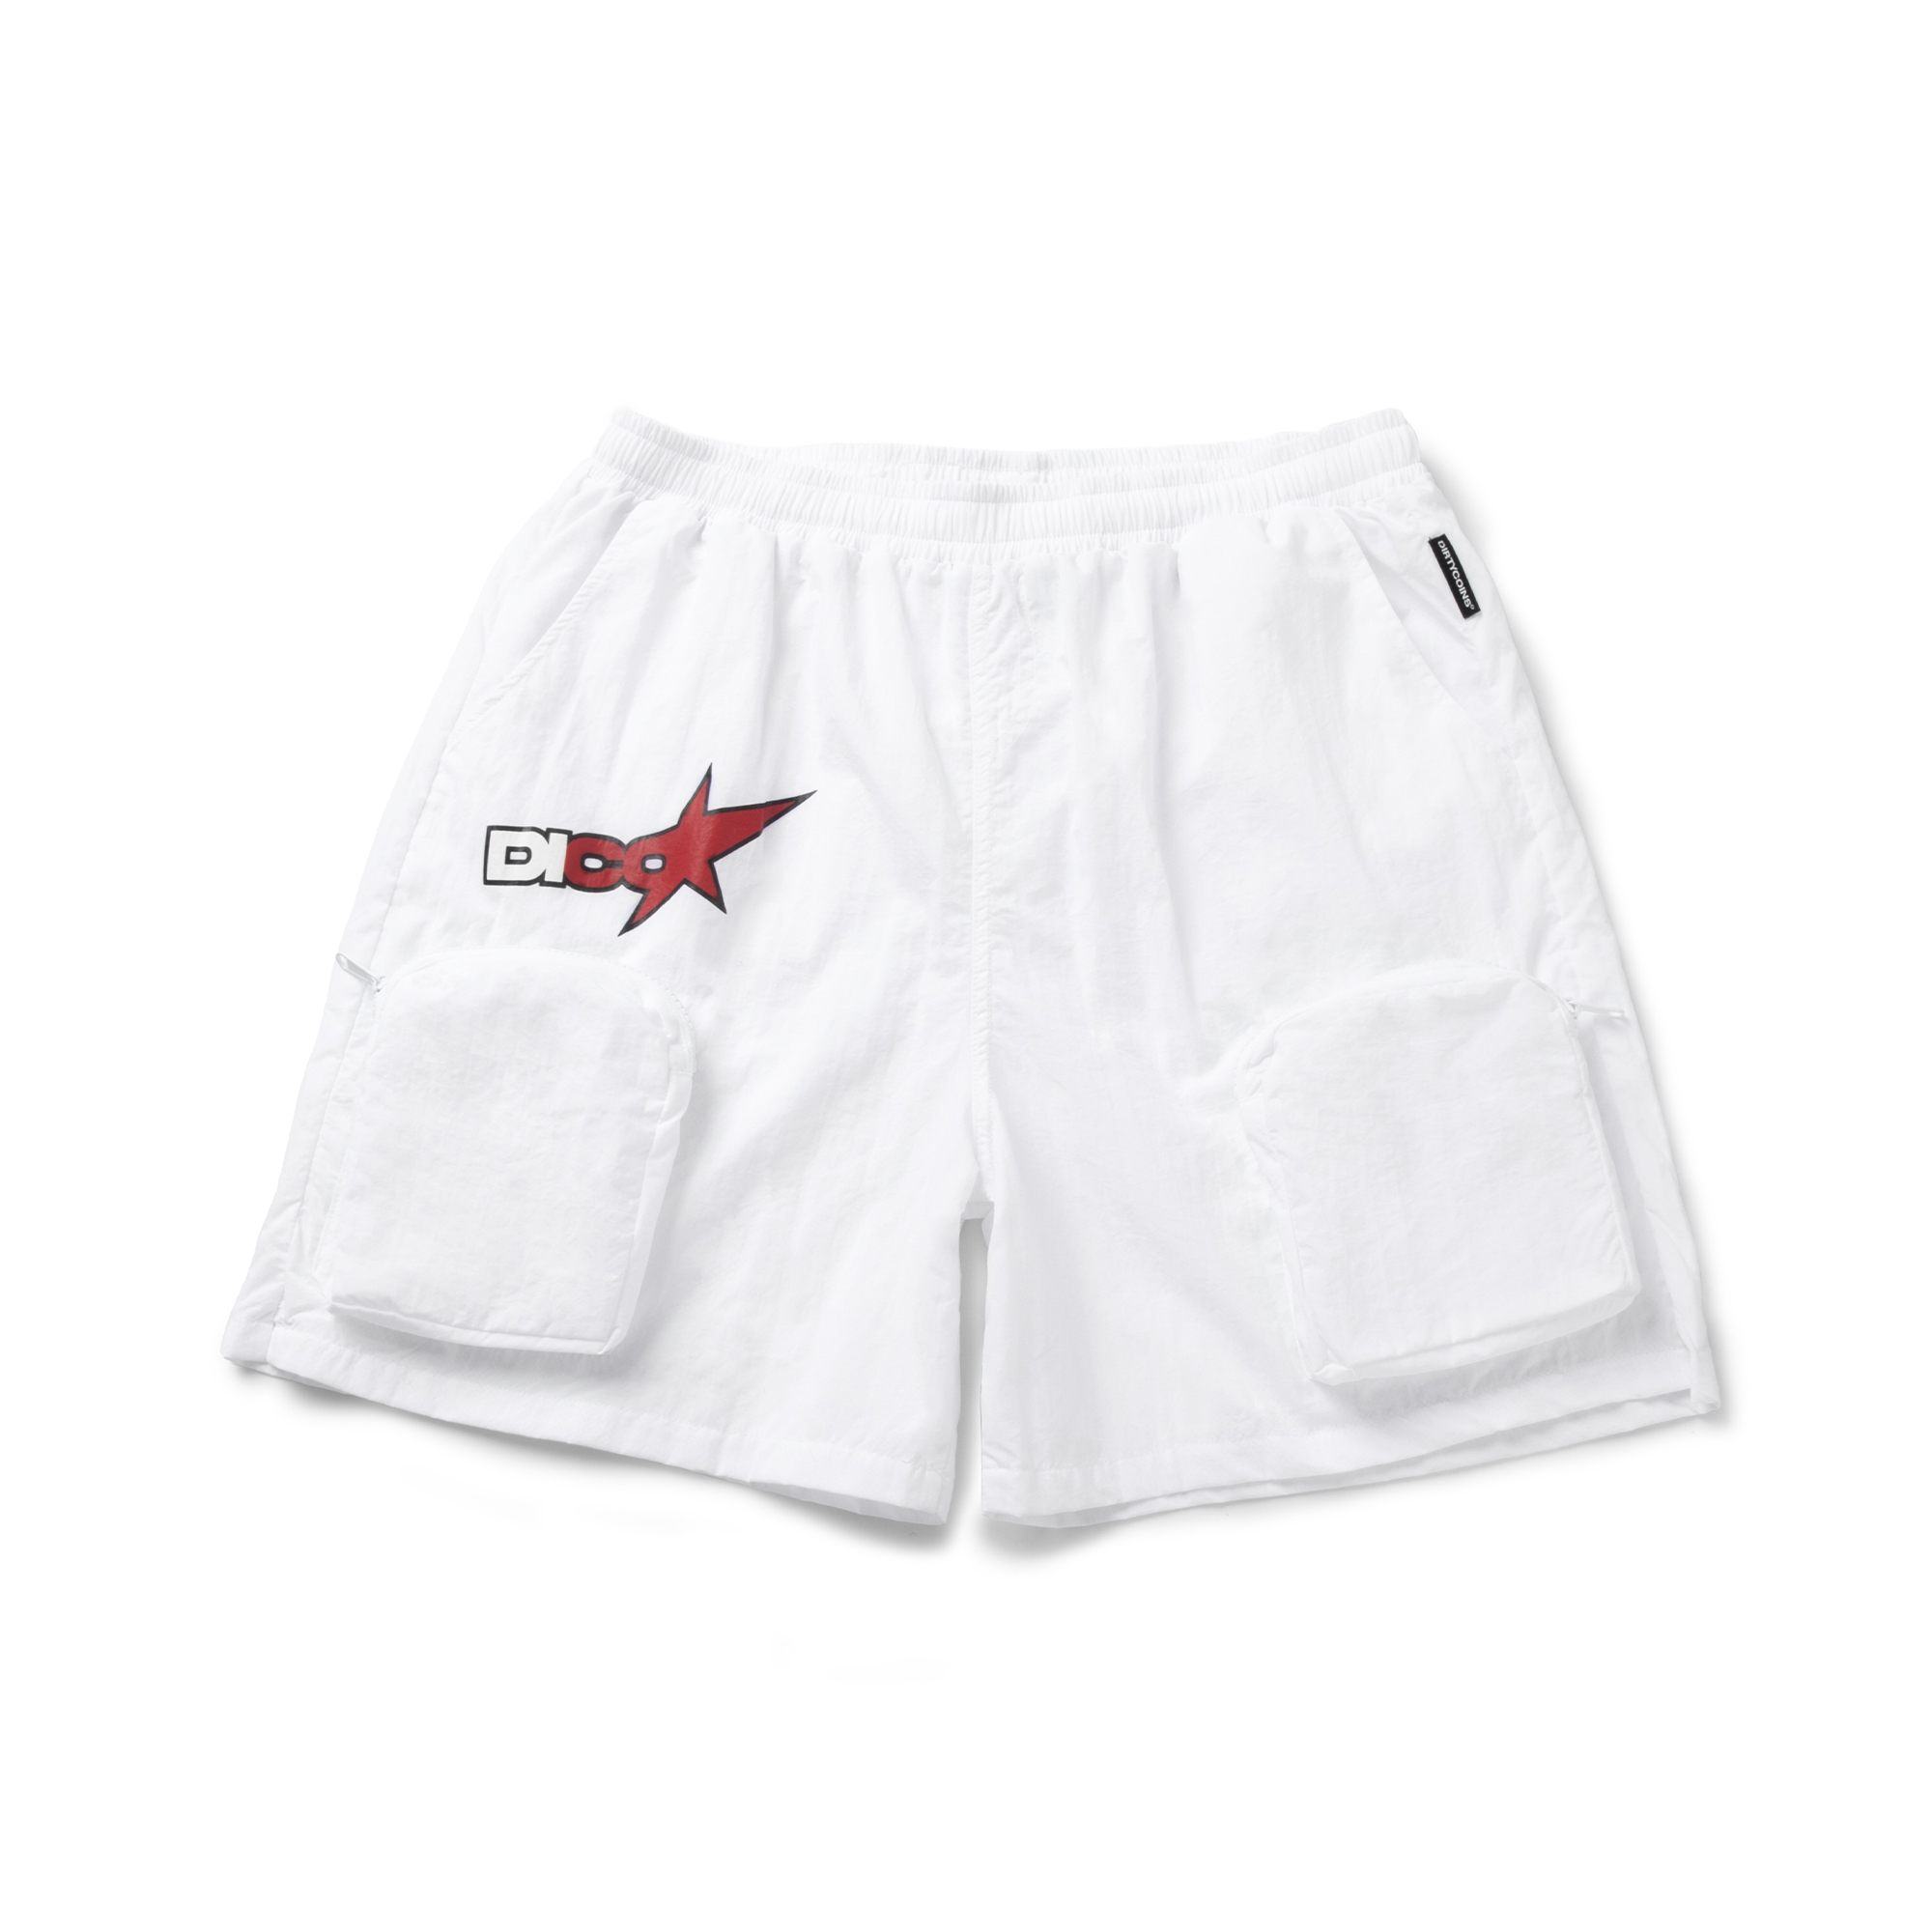 Quần Dico Star Cargo Shorts - White